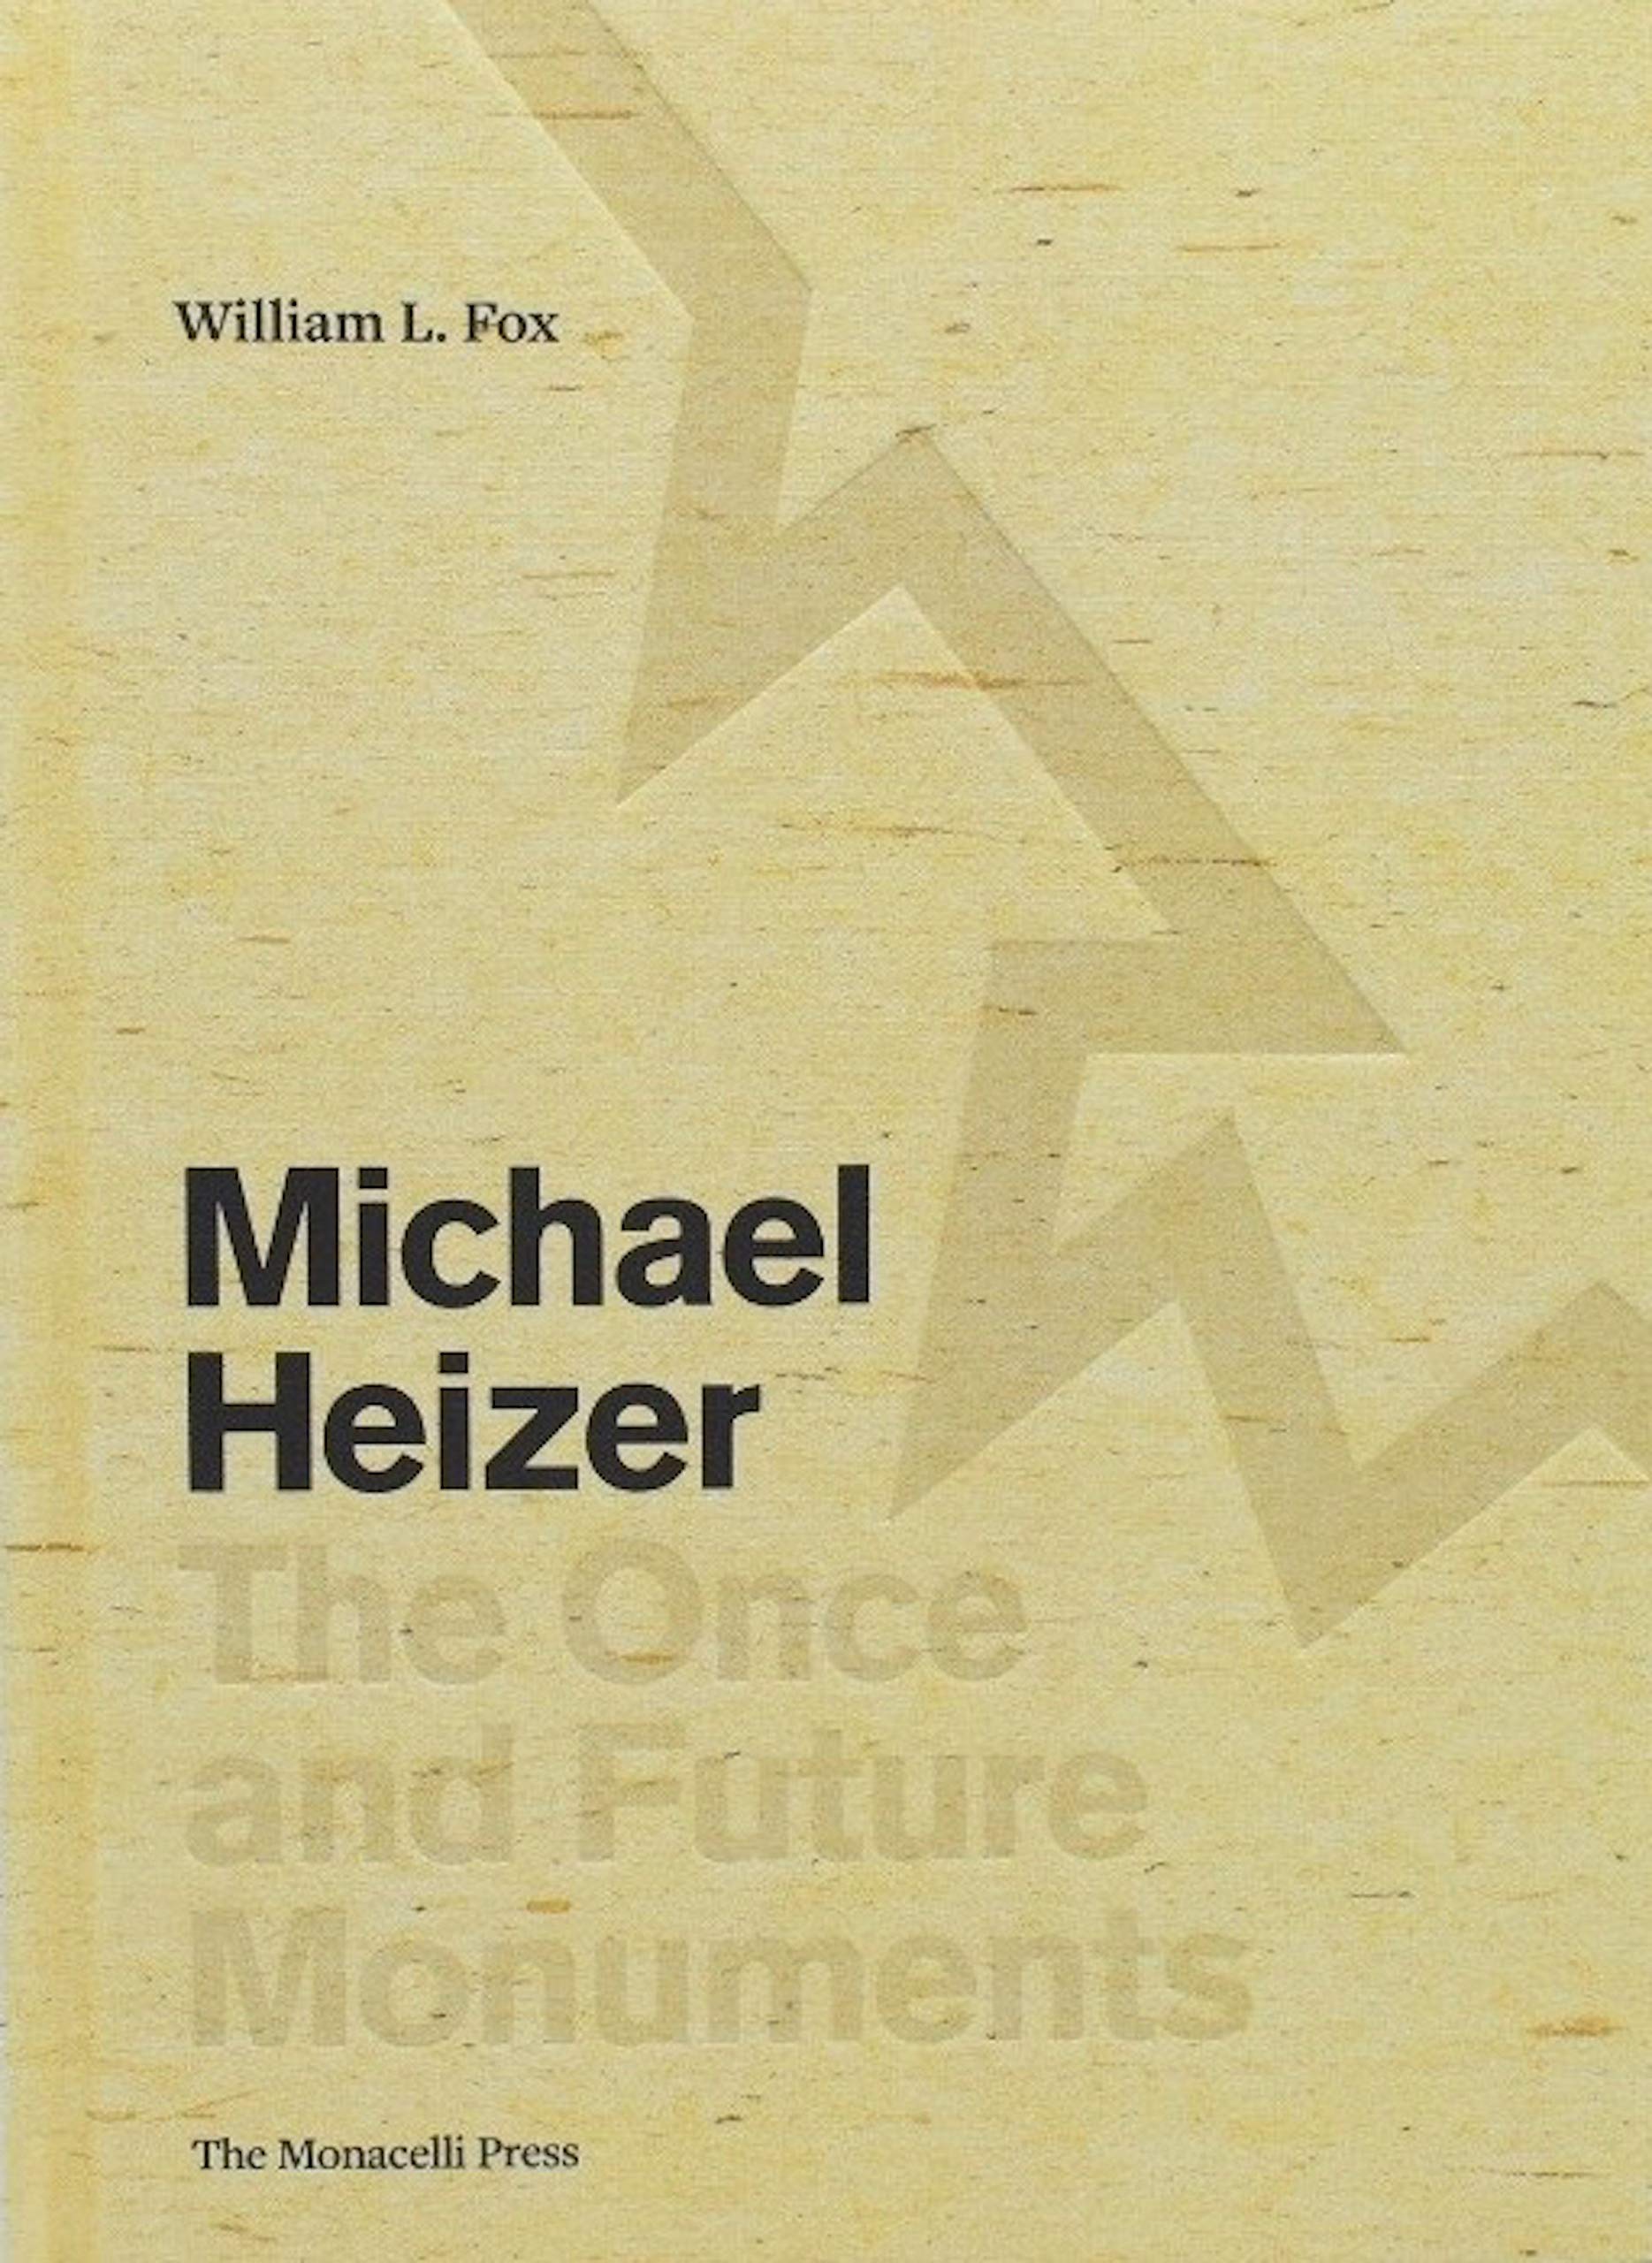 Michael Heizer | William L. Fox